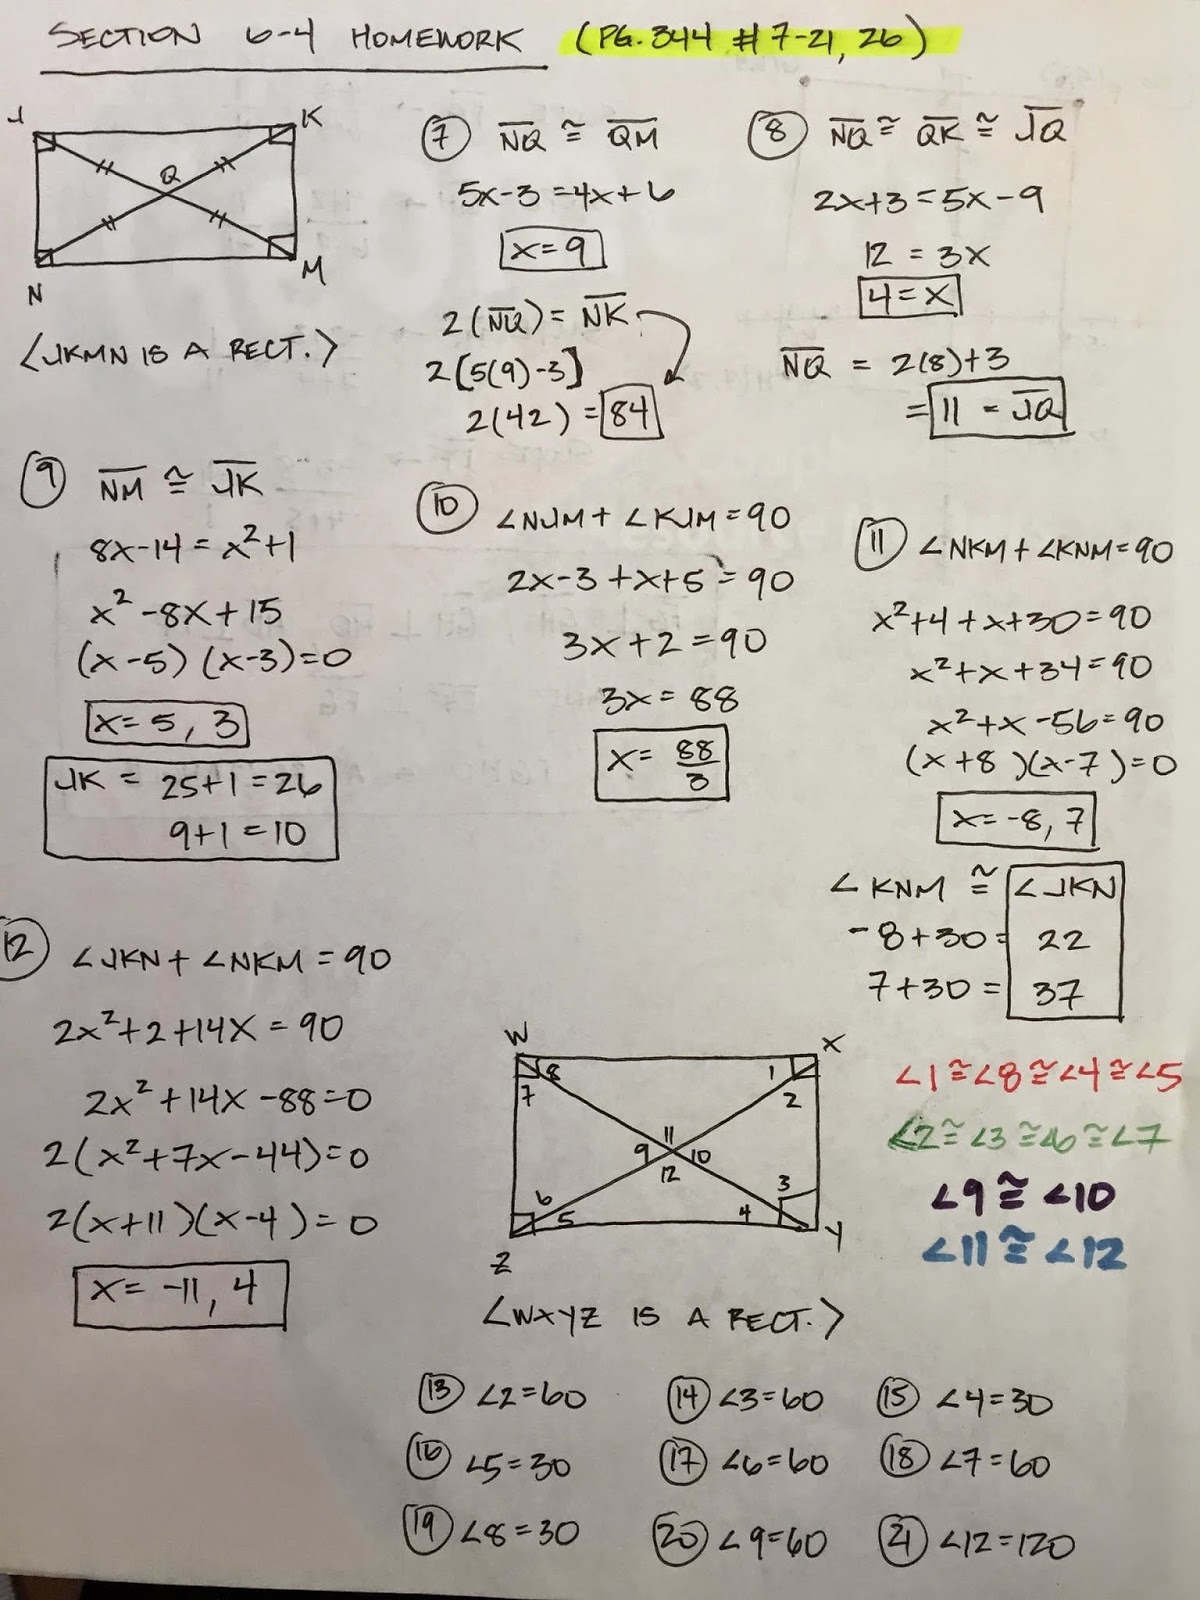 geometry-6-3-a-worksheet-answer-key-key-worksheet